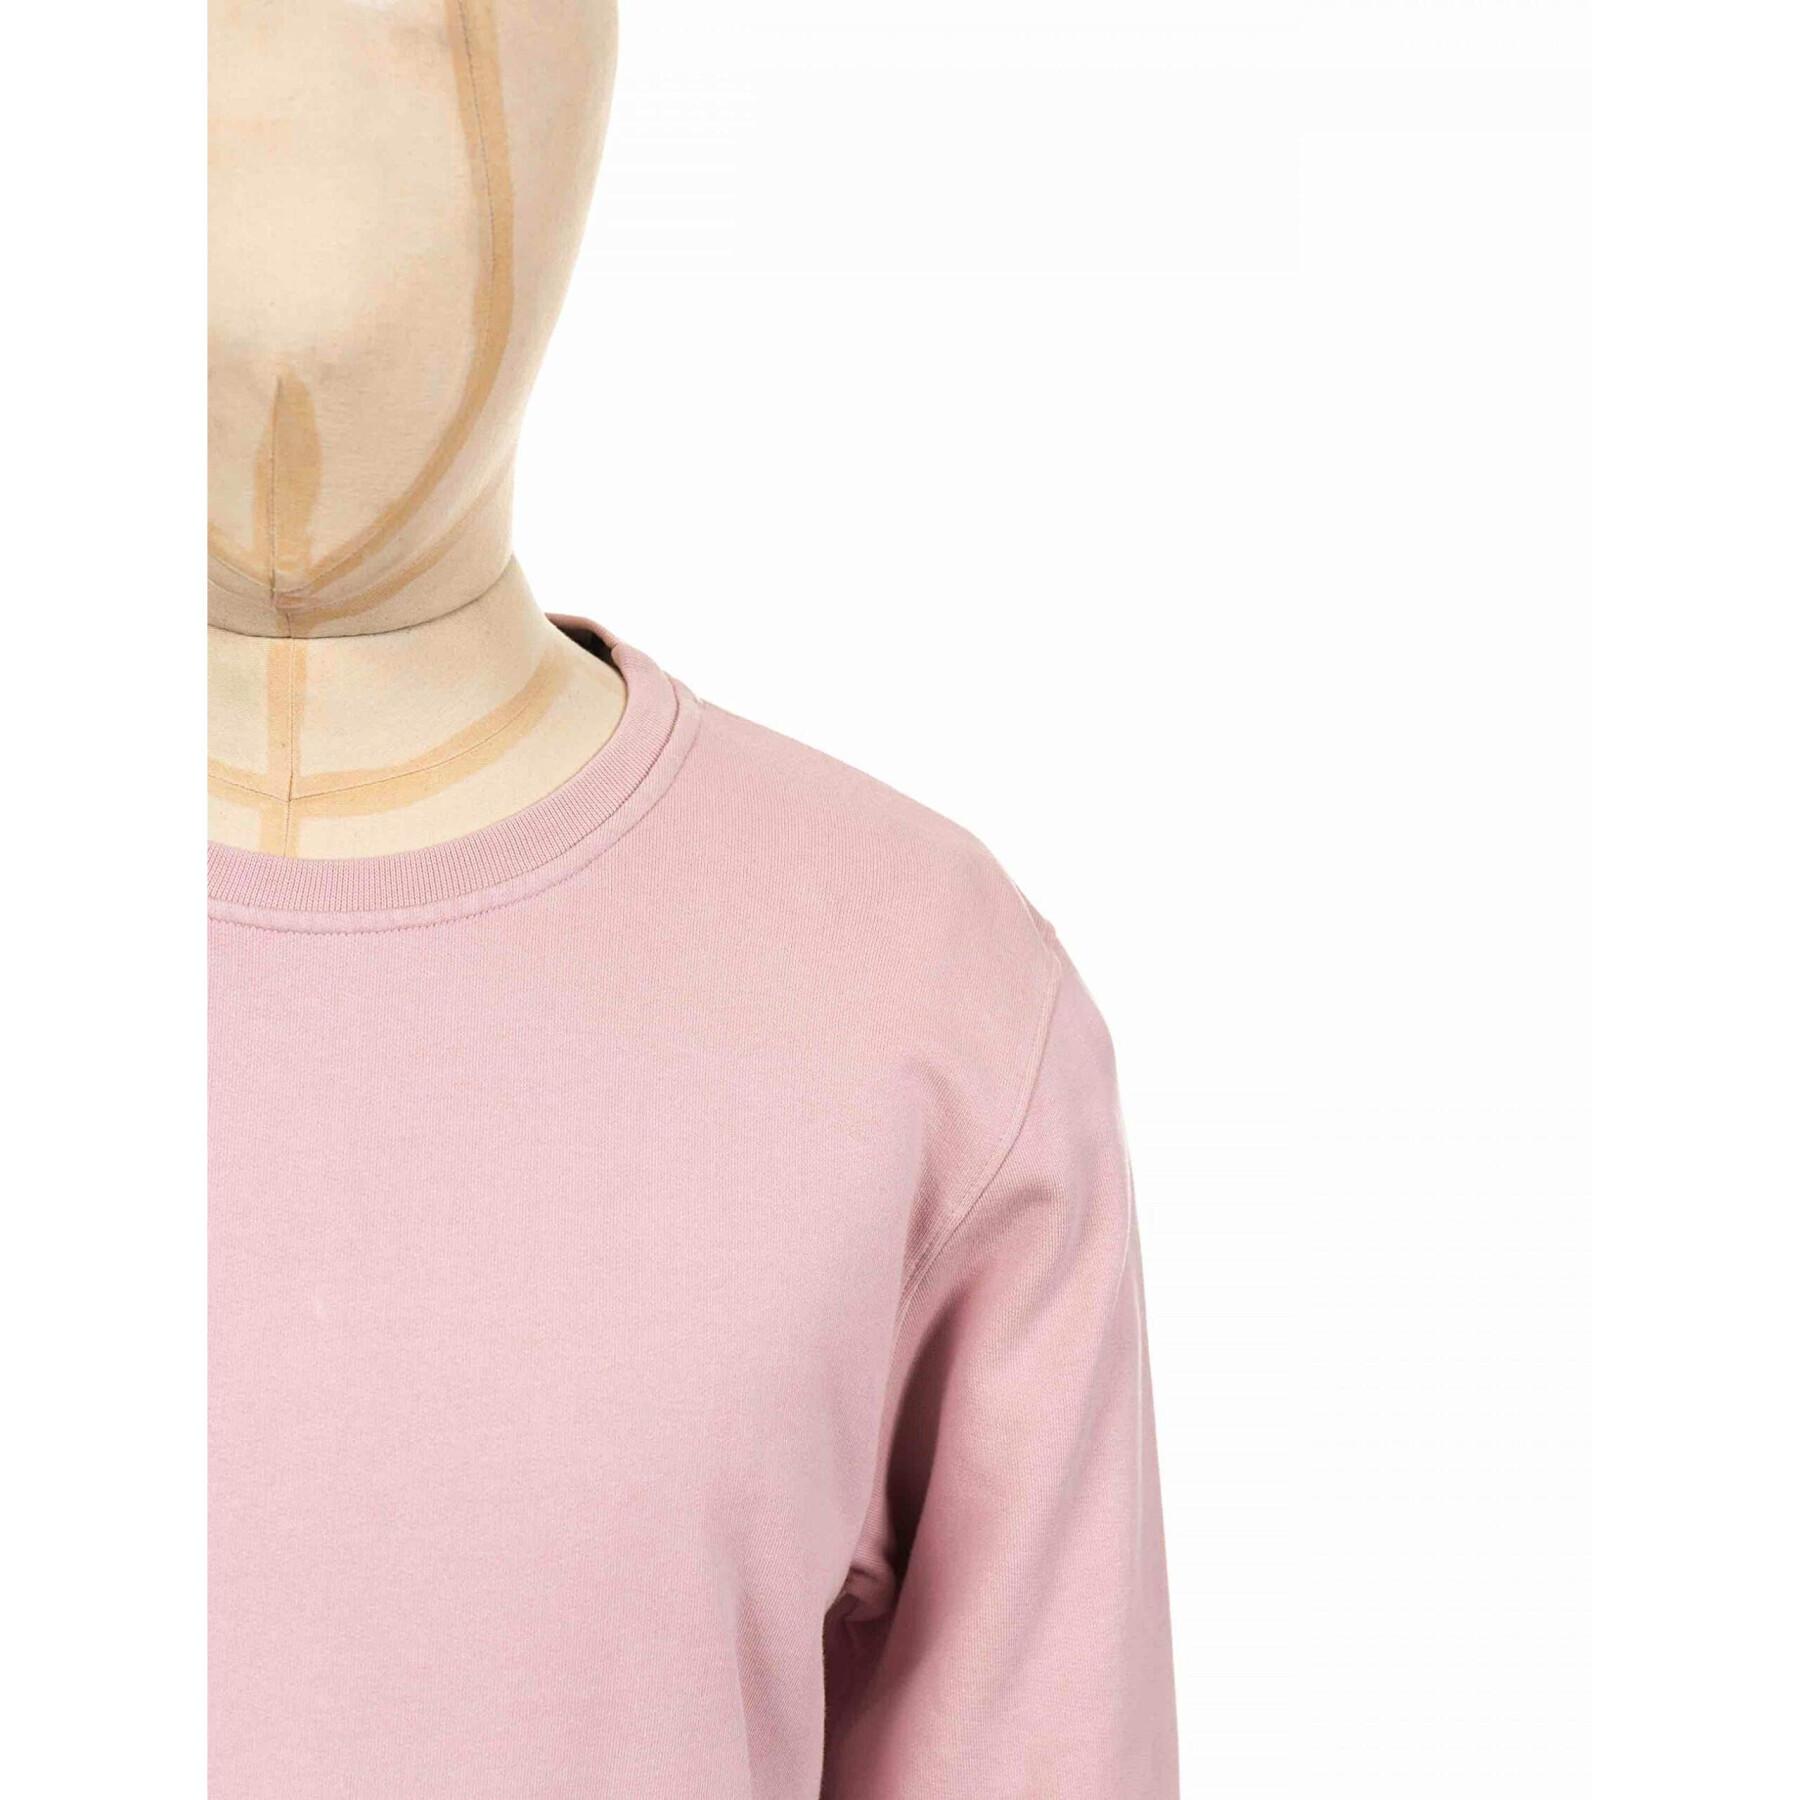 Sweatshirt round neck Colorful Standard Classic Organic faded pink